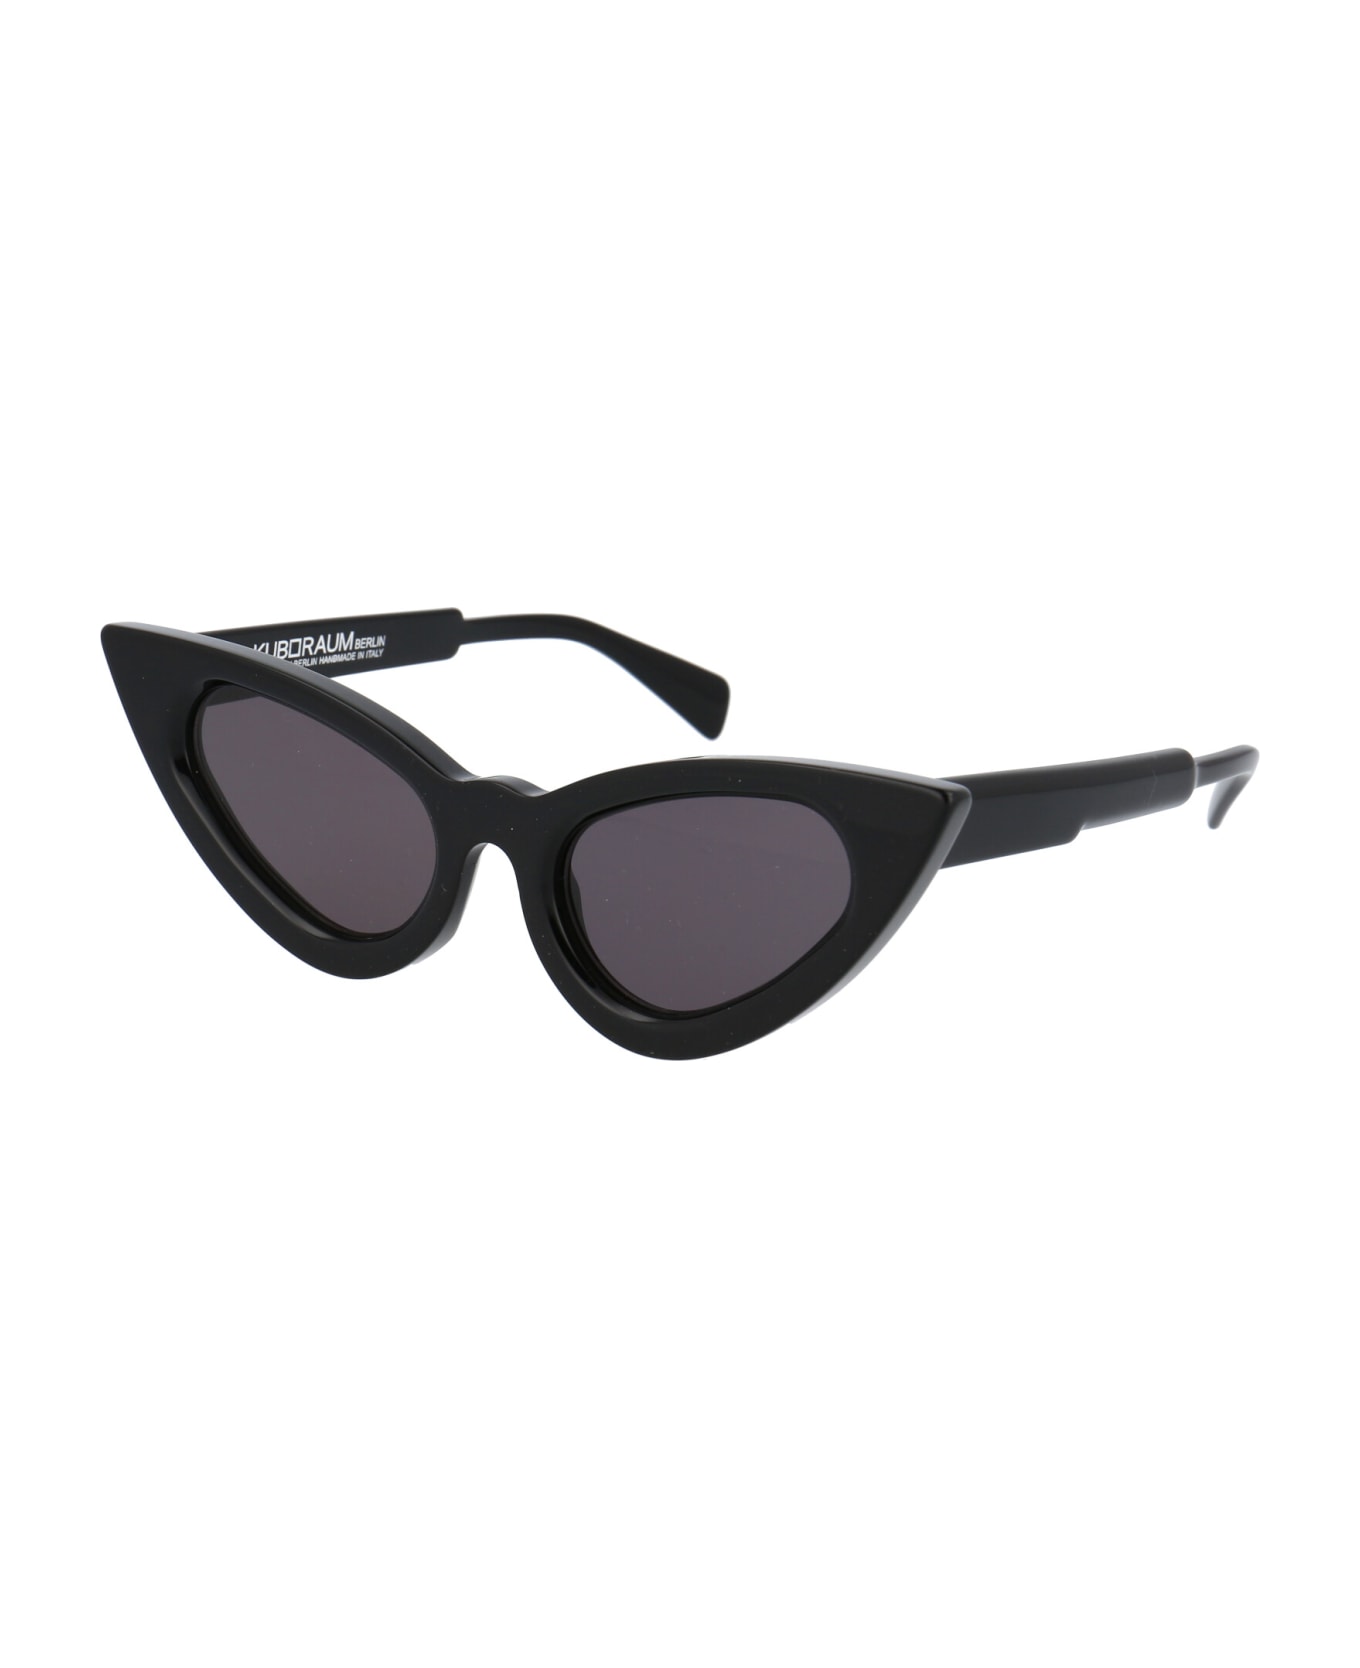 Kuboraum Maske Y3 Sunglasses - BS 2grey